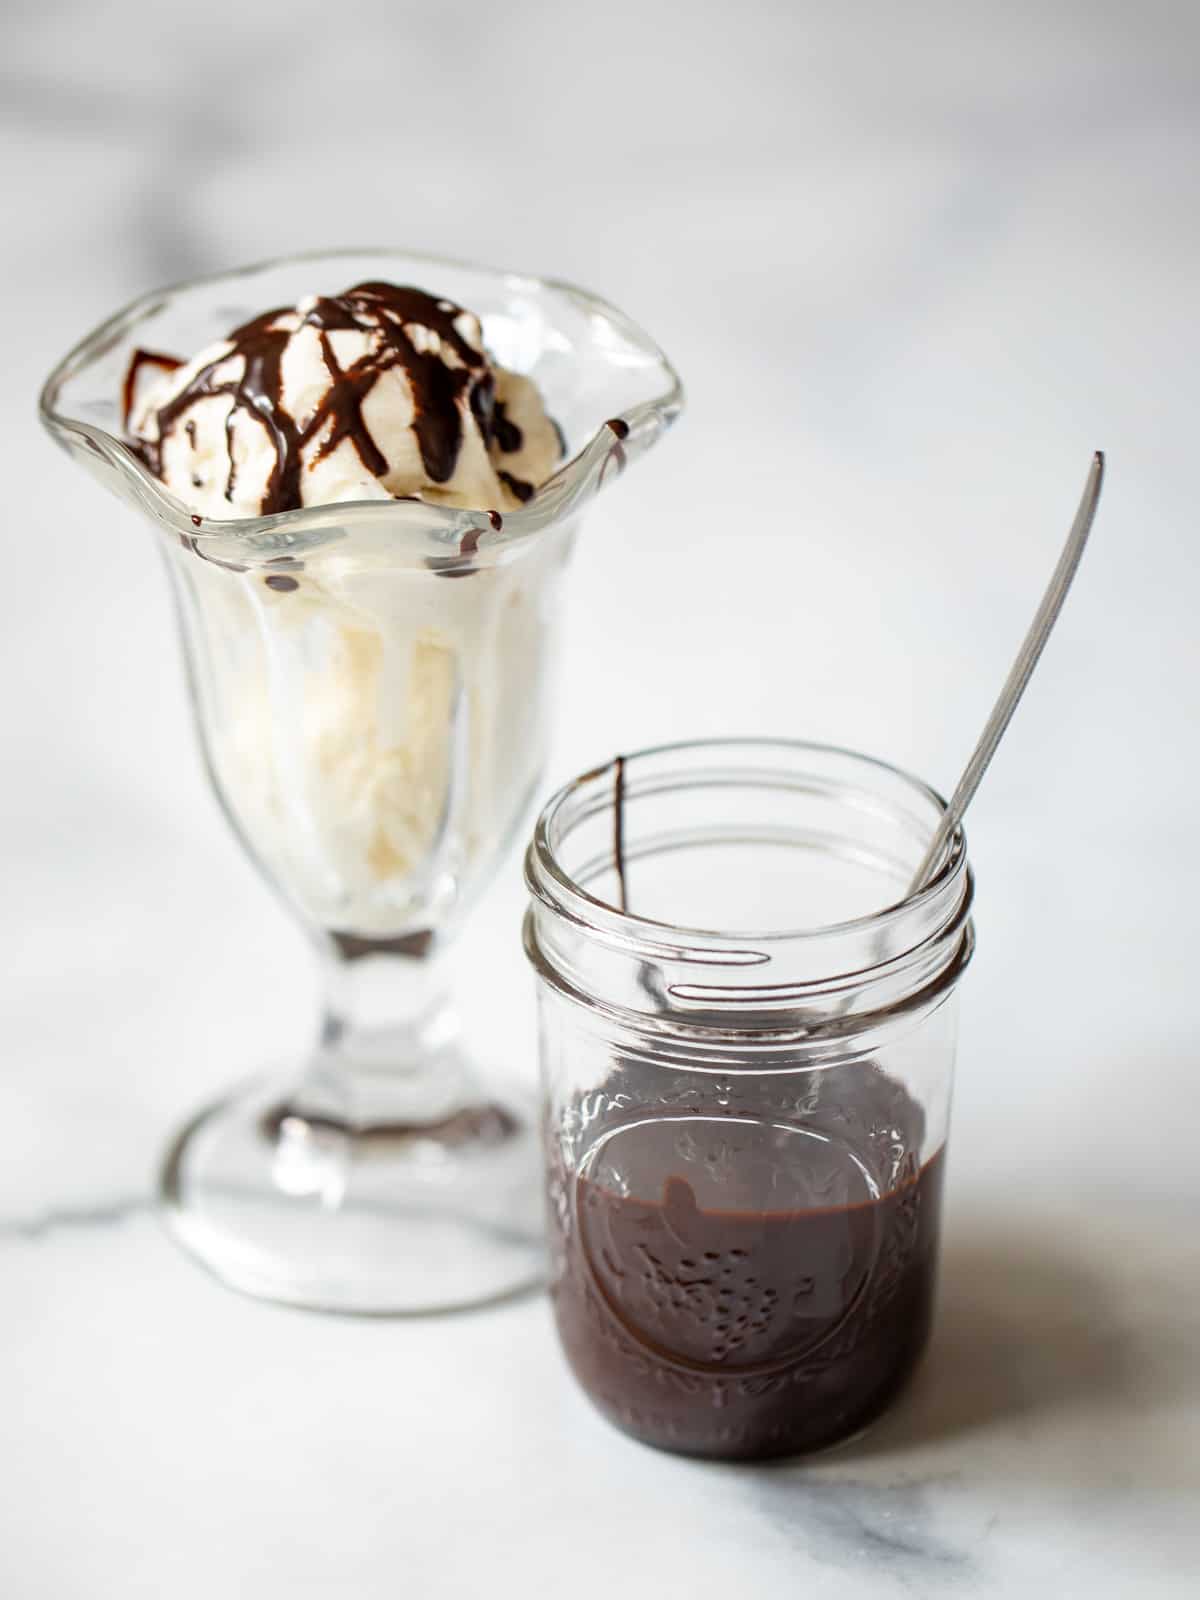 Jar of homemade chocolate syrup next to vanilla ice cream sundae.